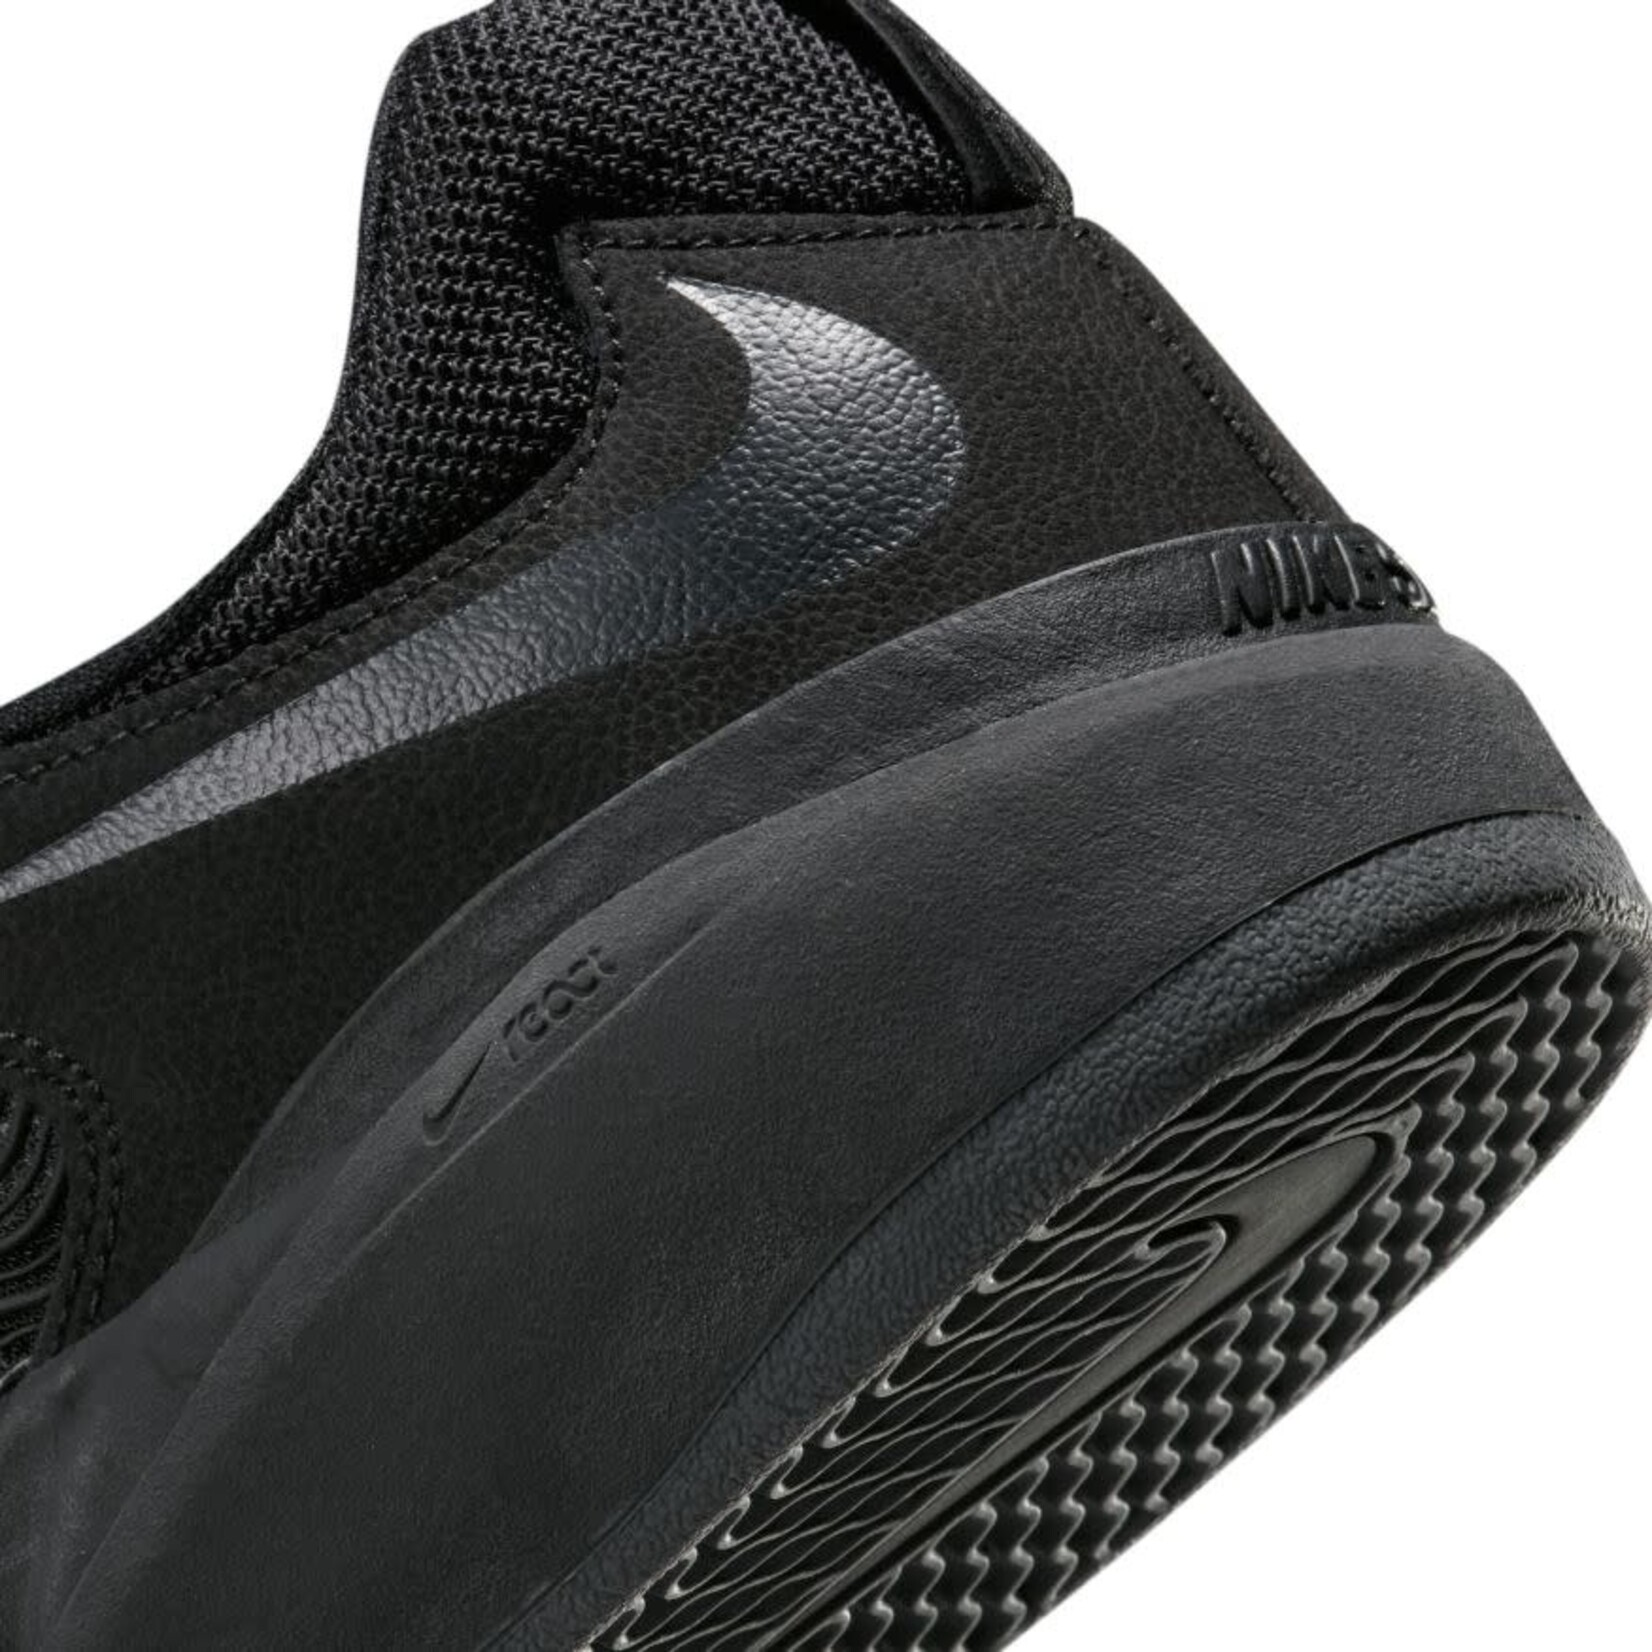 Nike SB Nike SB Ishod Wair Premium Black/Black-Black